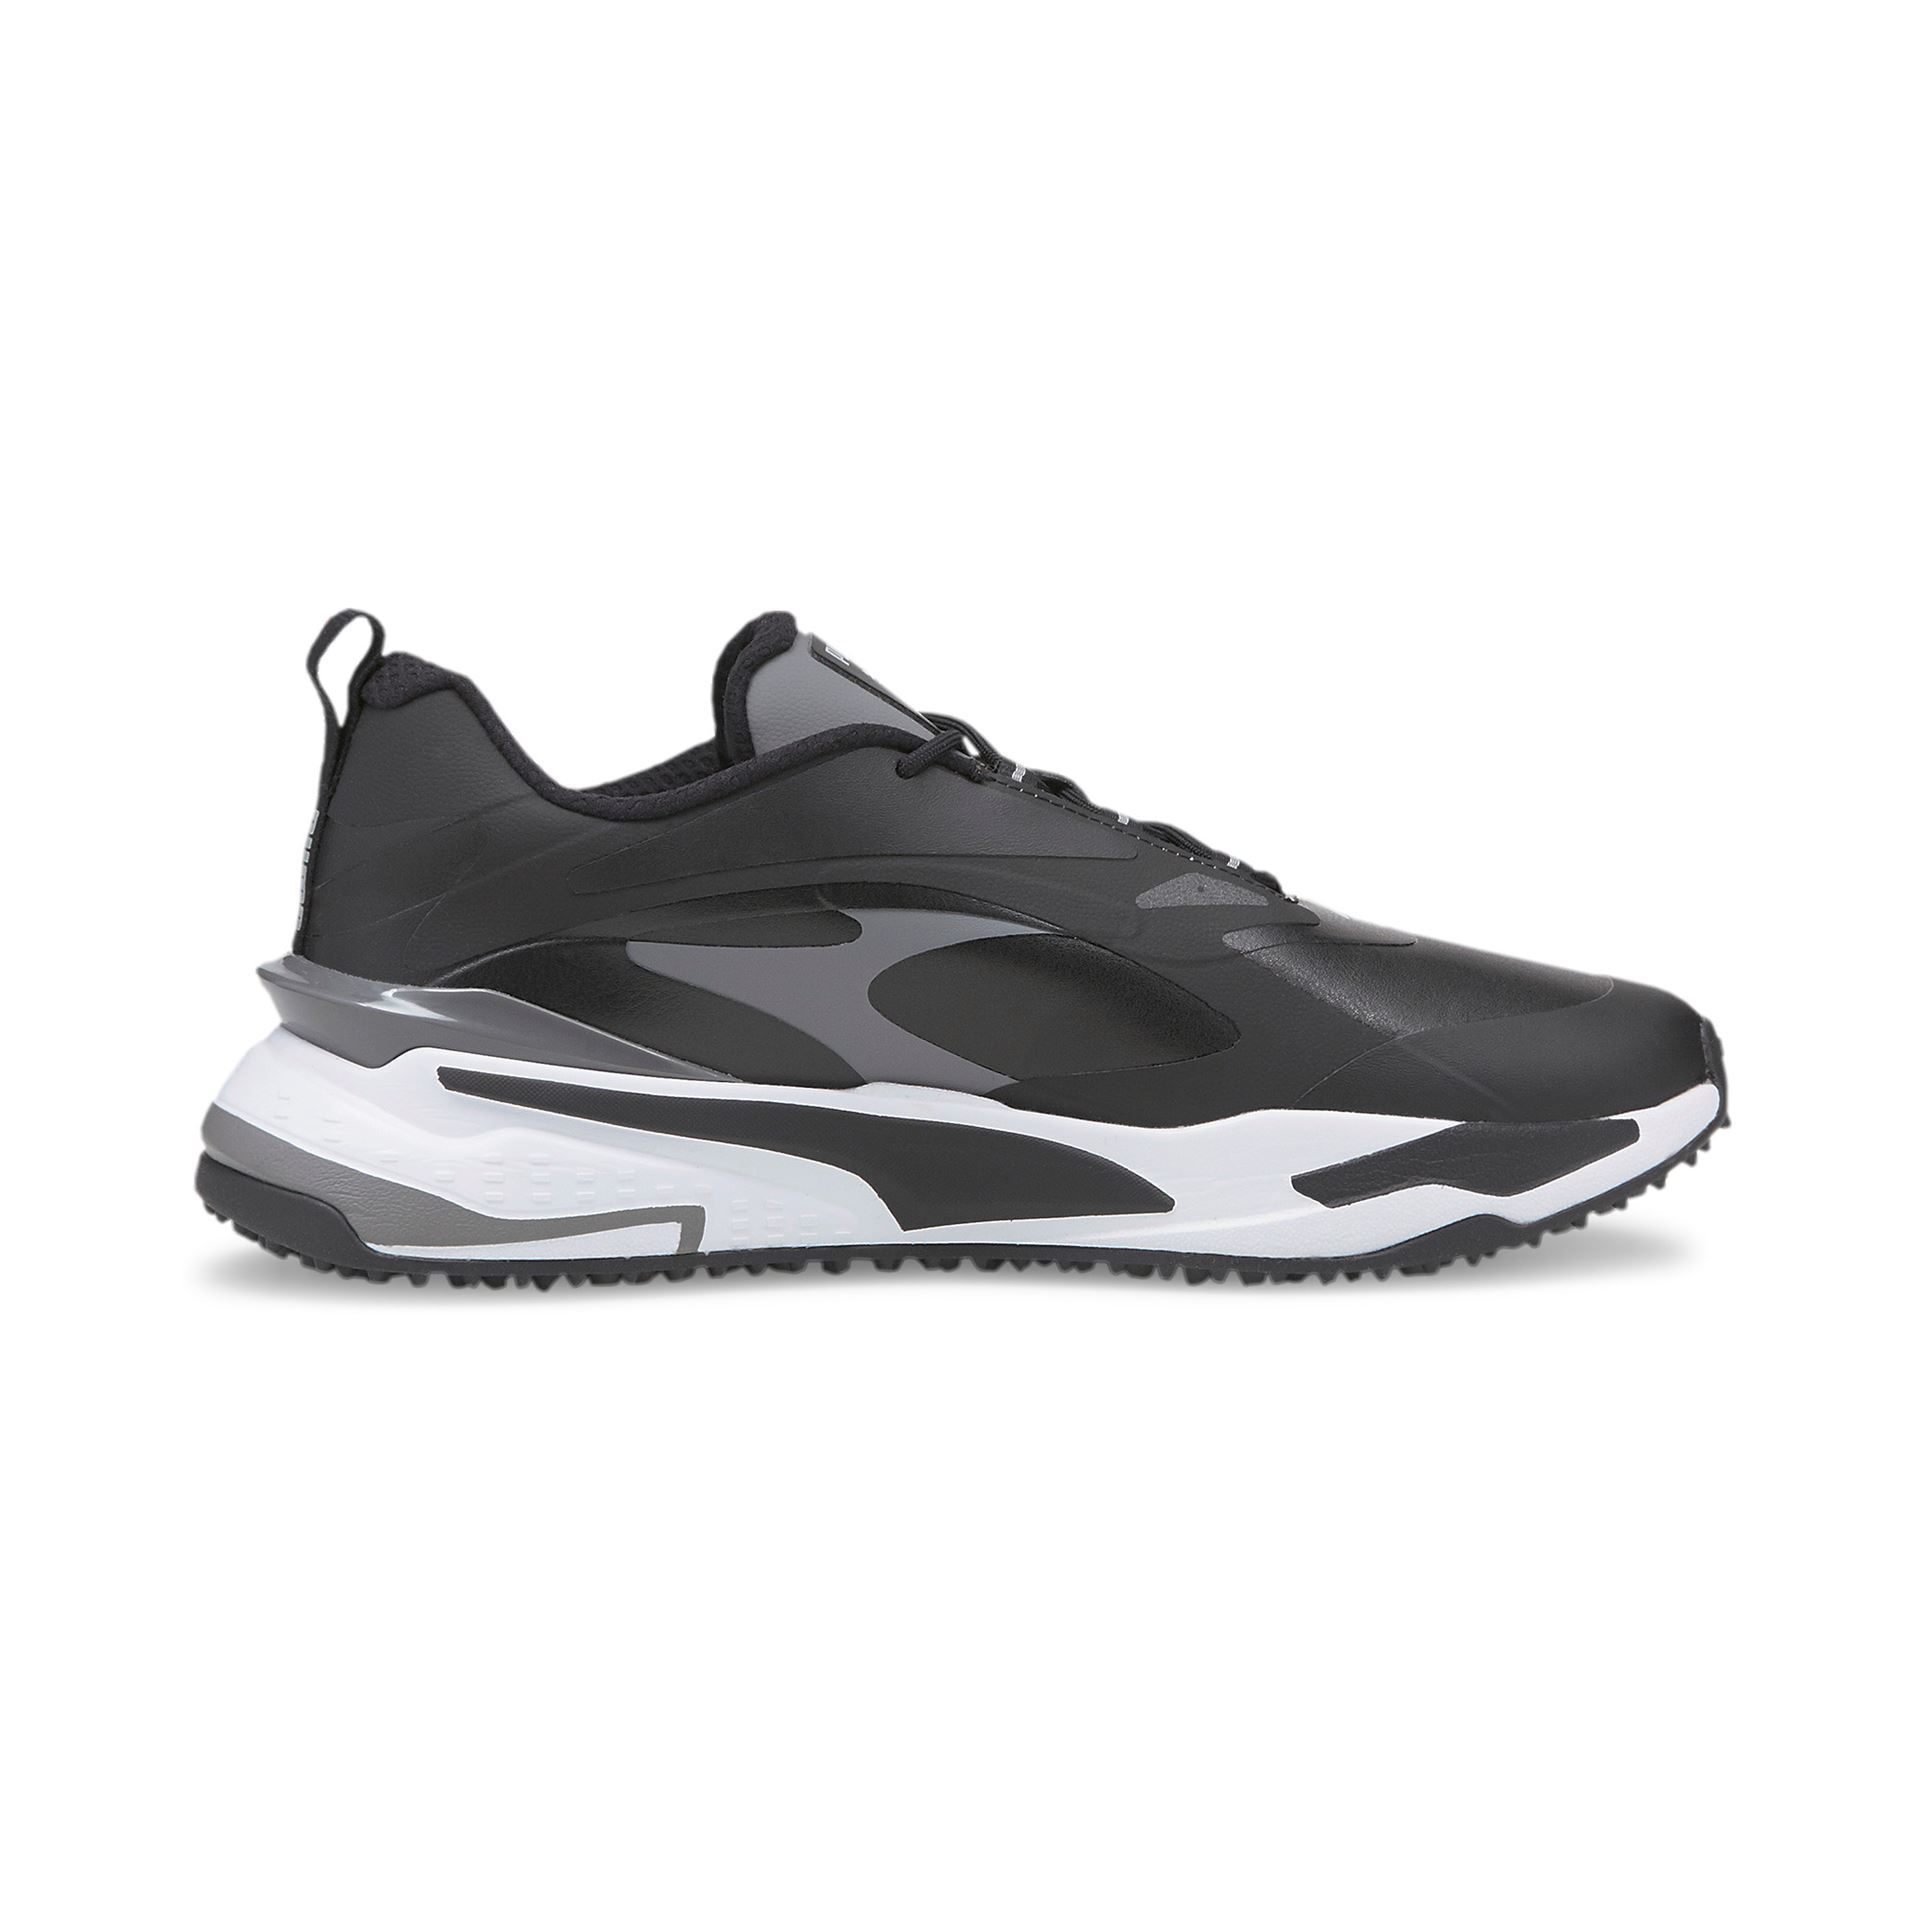 Puma Mens GS-Fast Golf Shoes - 376357 03 - Black/Grey/White